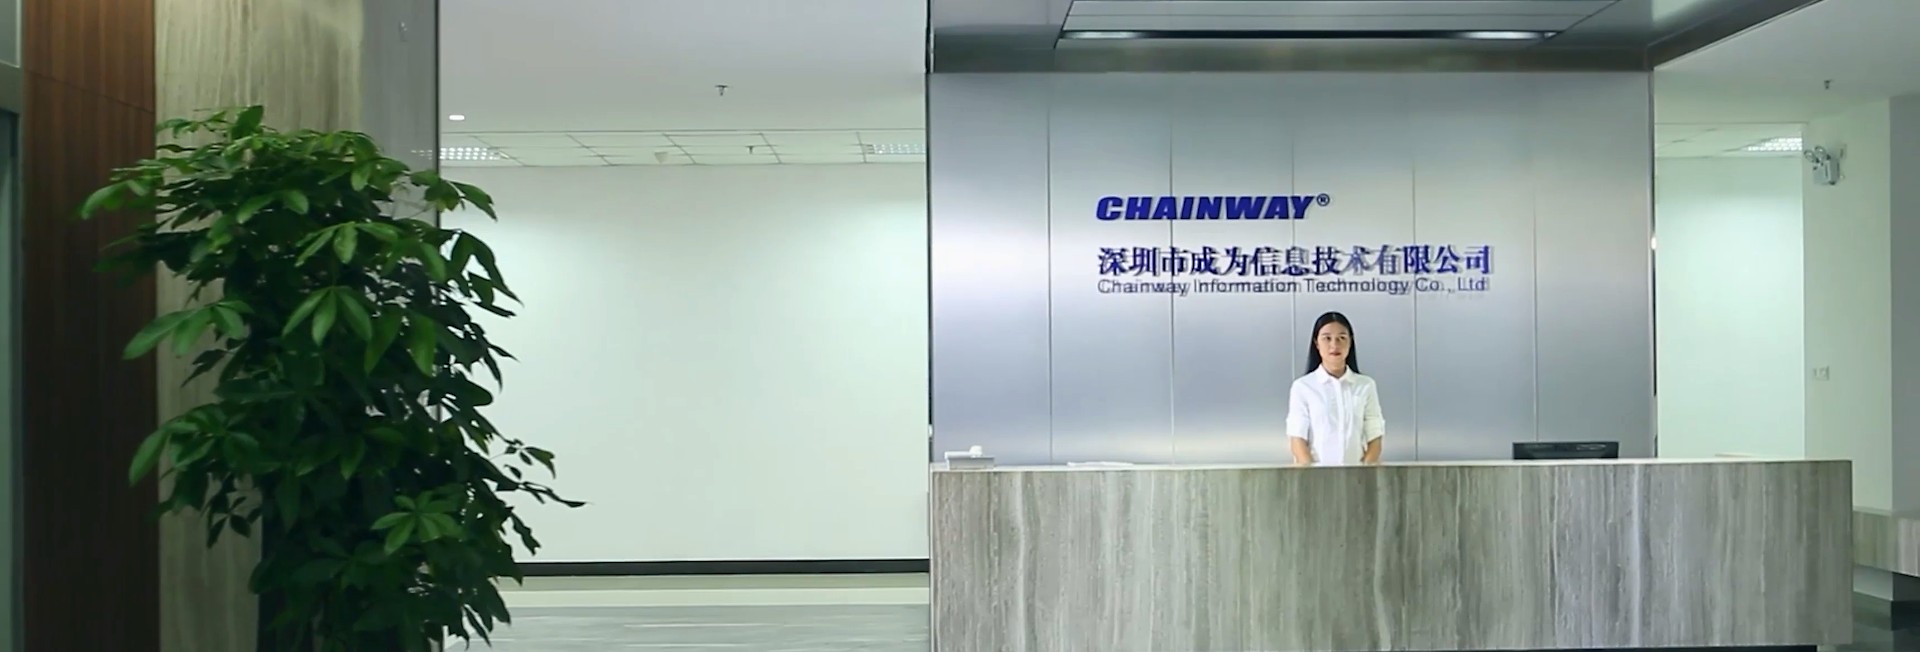 Chainway_Information_Technology_Co_Ltd_Recepcja_01